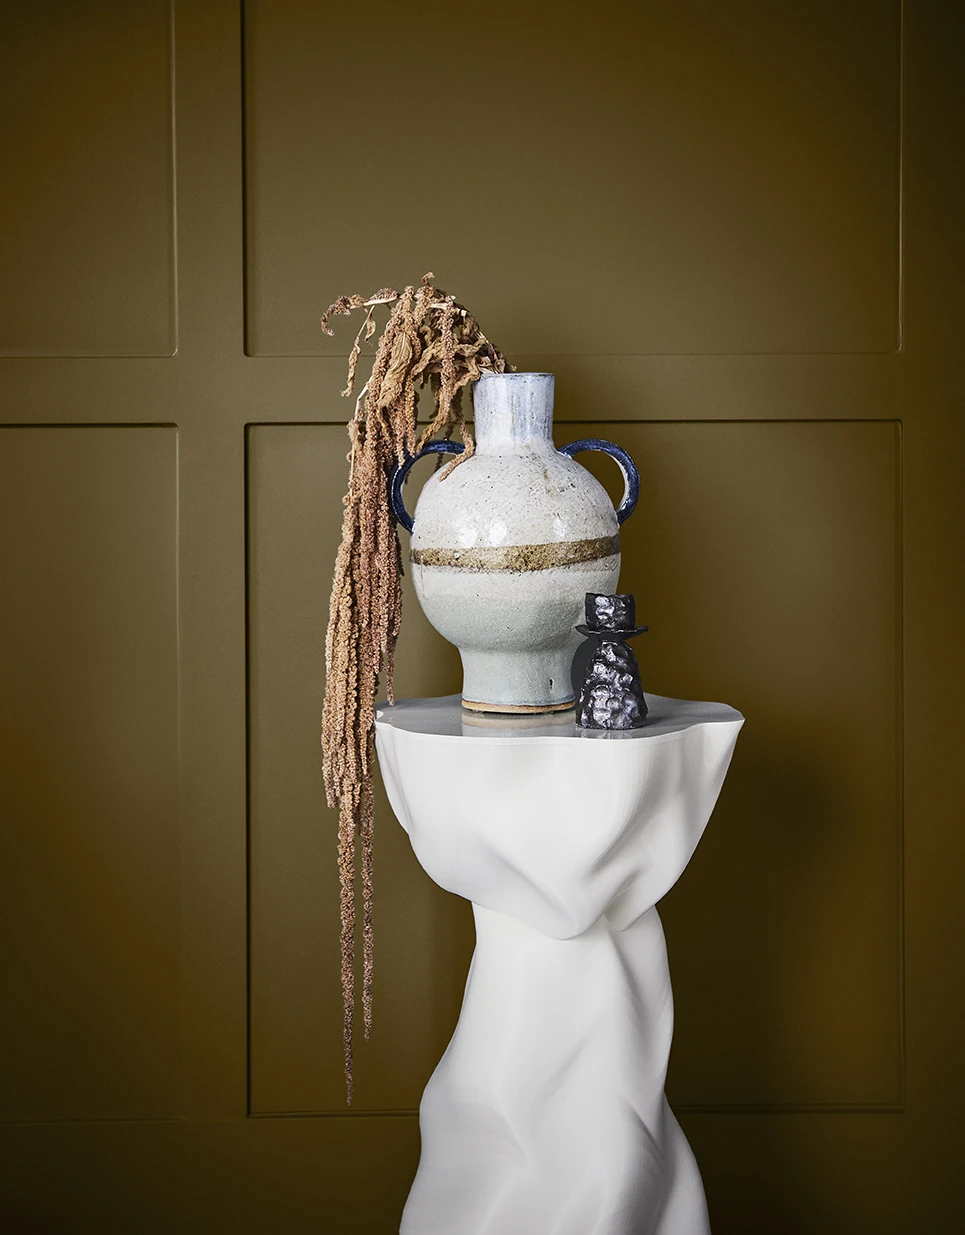 Ceramic vase on white pedestal against khaki wall